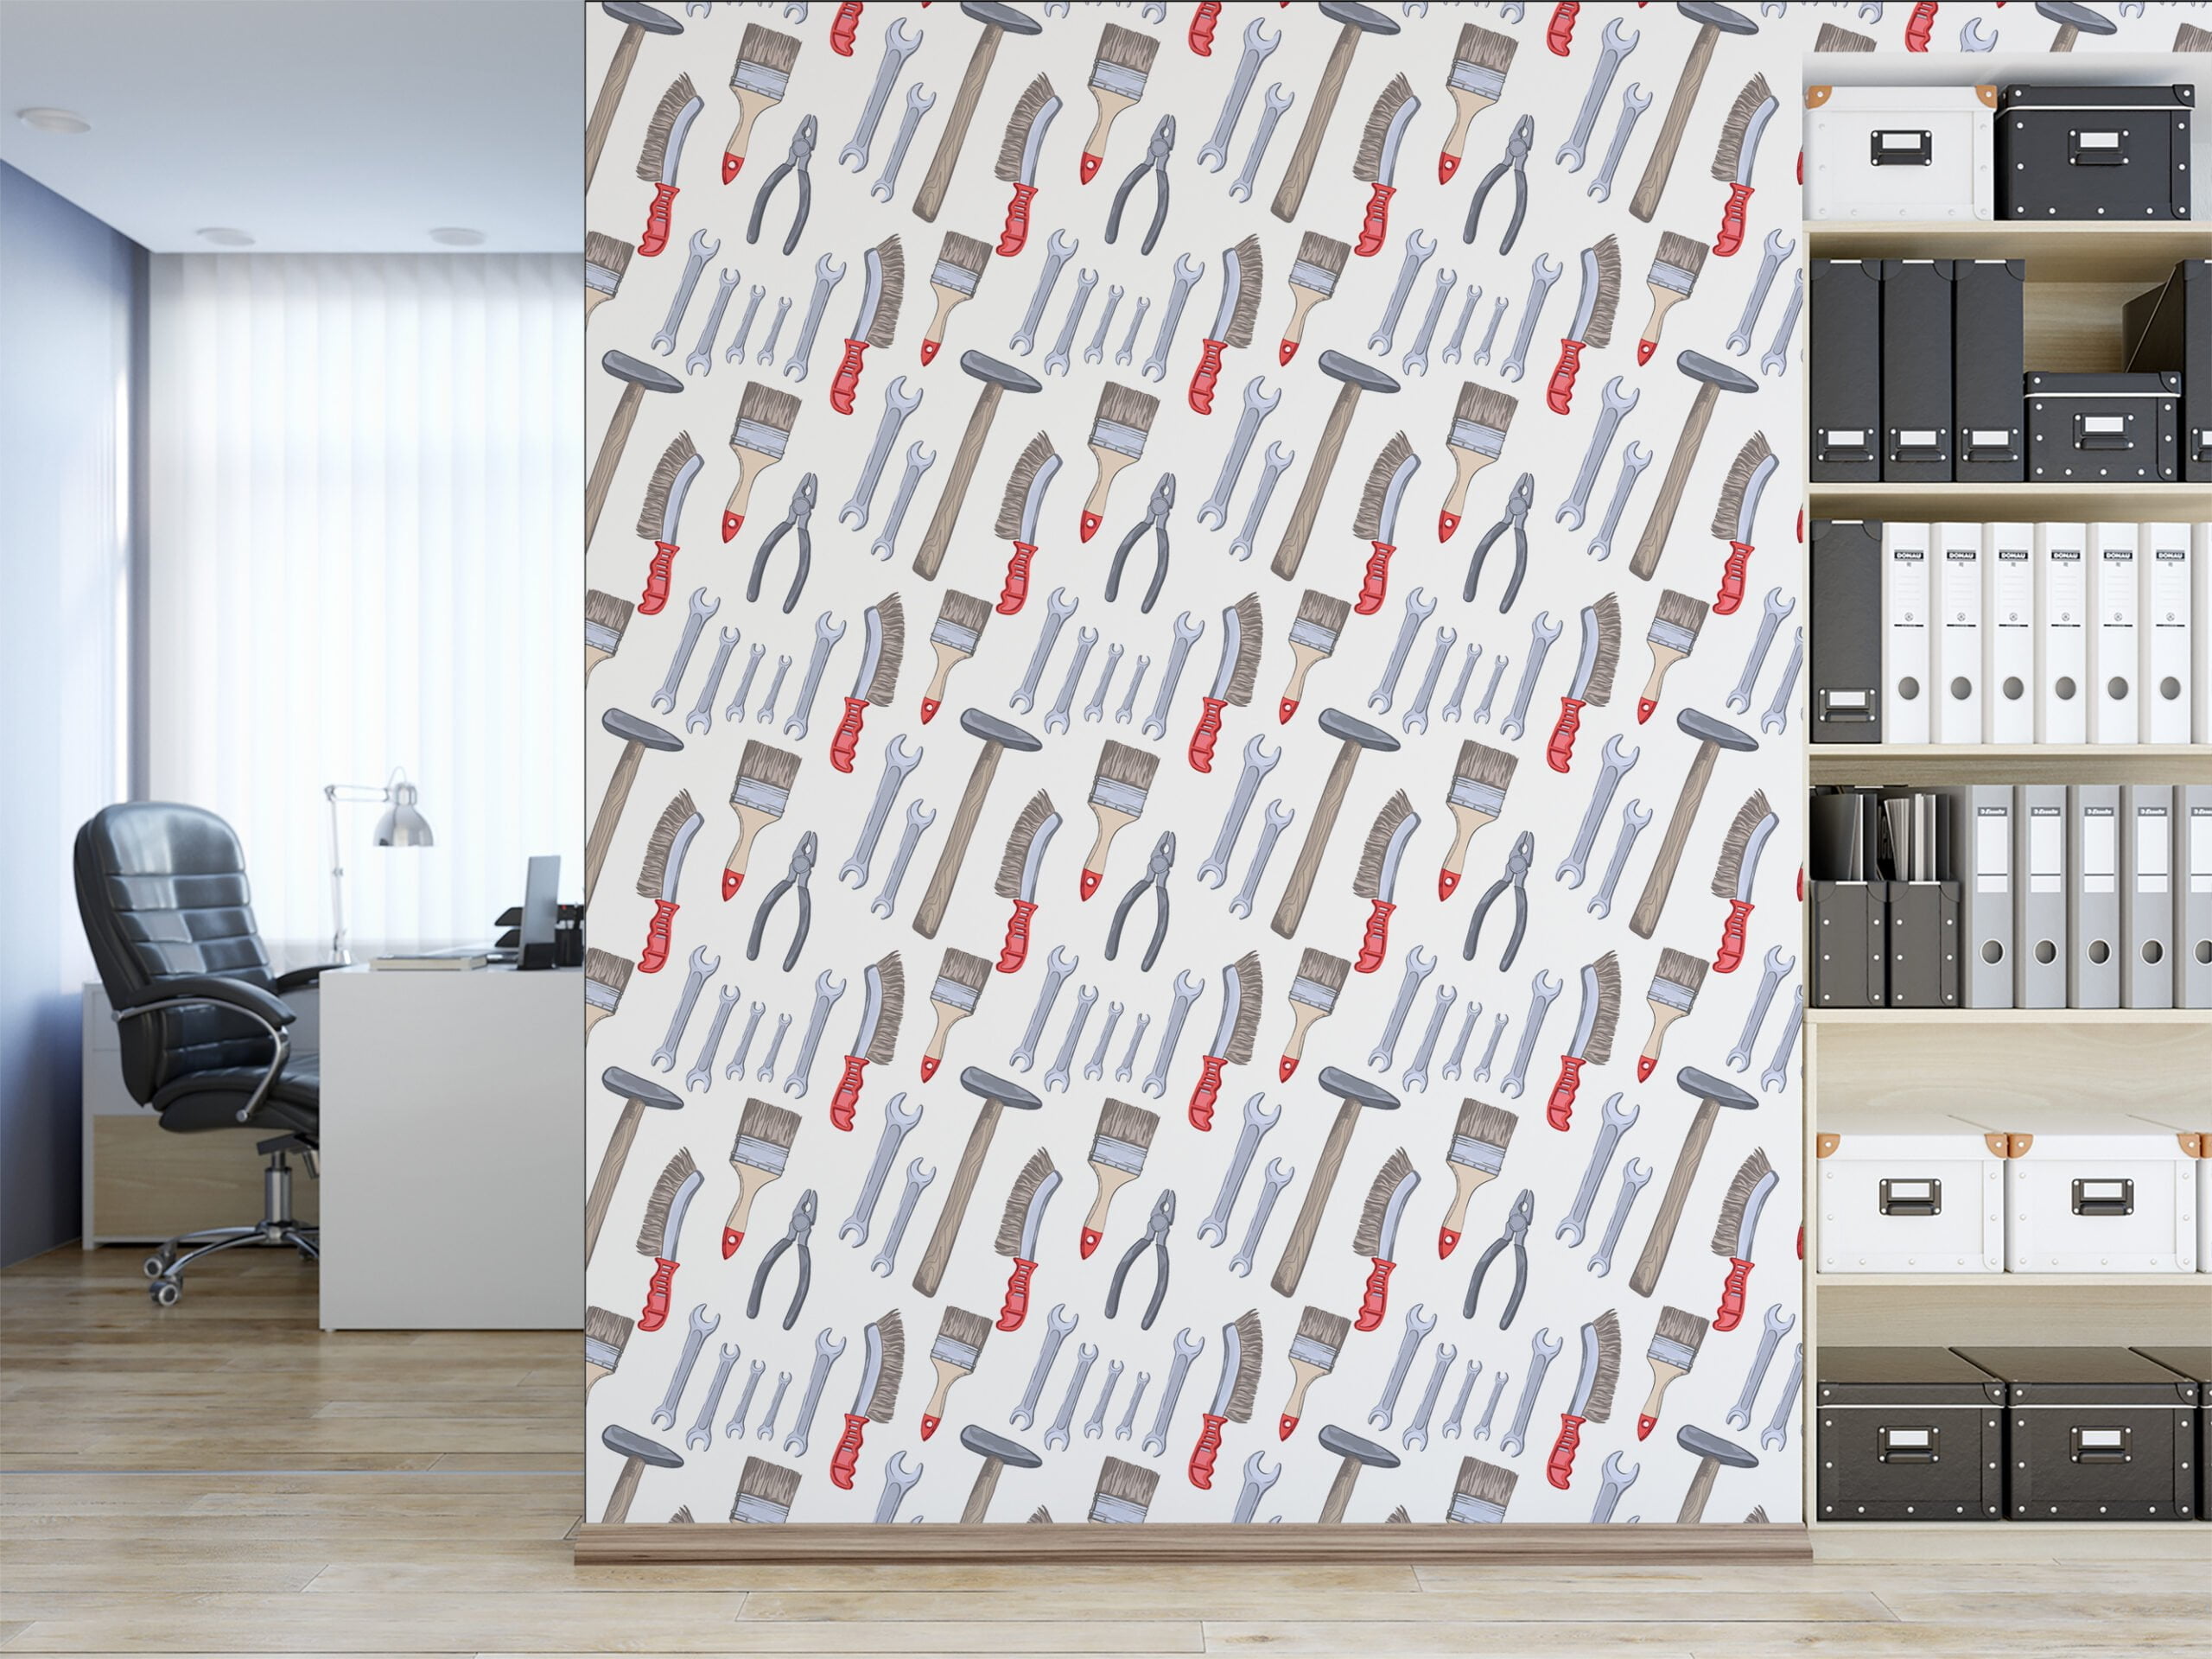 Handyman Putting Wallpaper On Wall Stock Photo 424756768 | Shutterstock